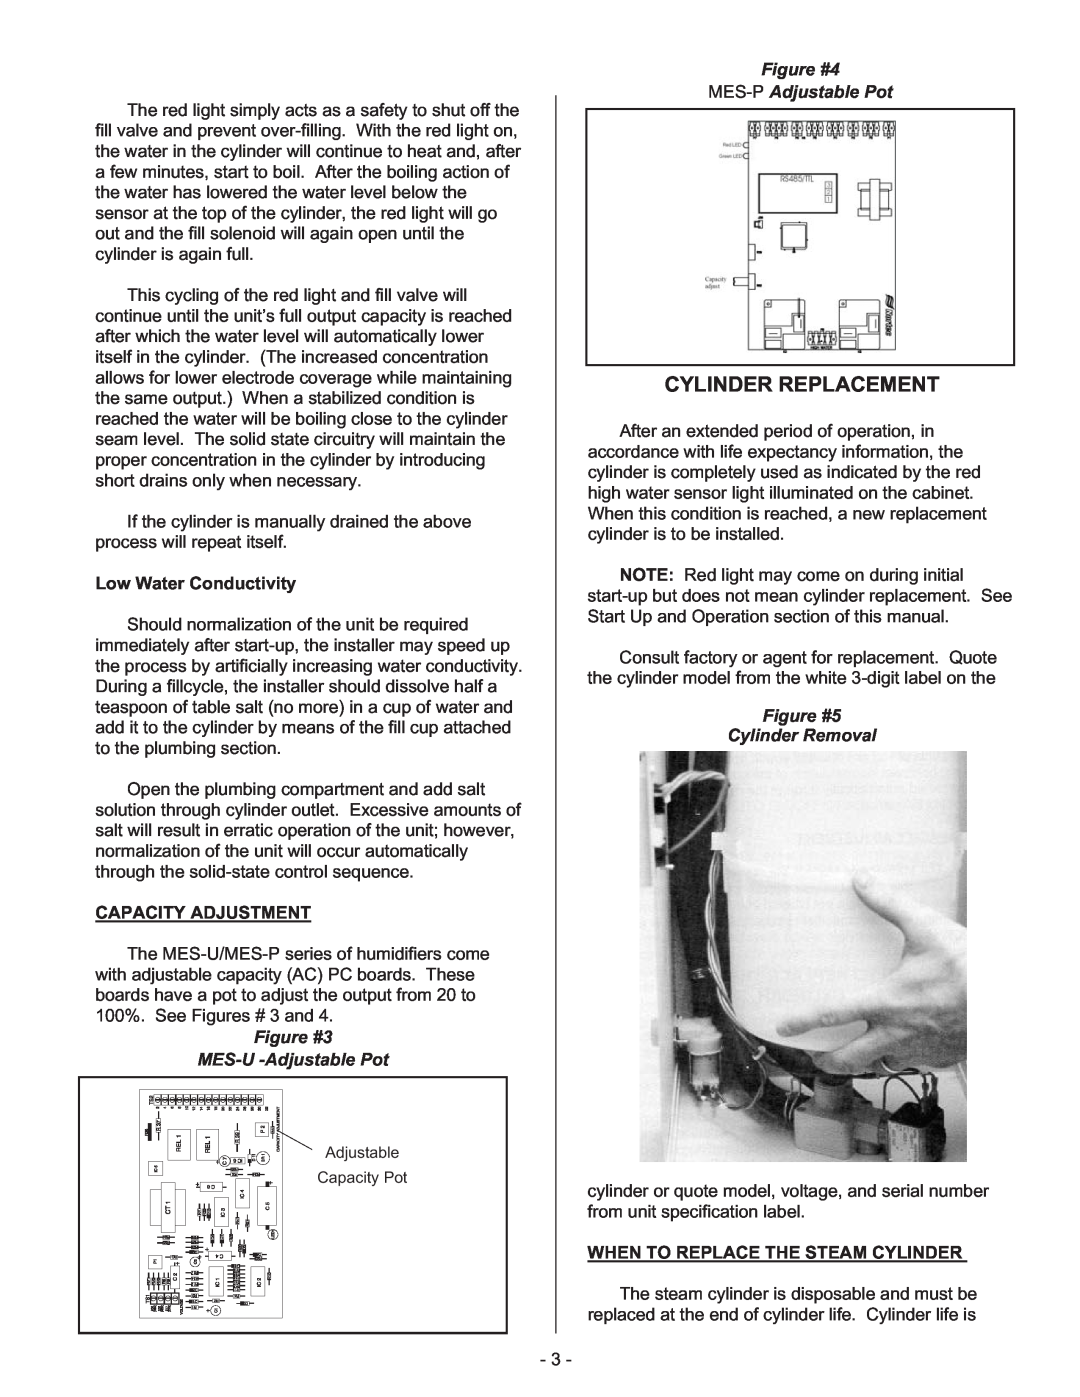 Nortec Industries None manual Ad ustable, Capacity Pot, Cylinder Replacement, Figure #3 MES-U -AdjustablePot 